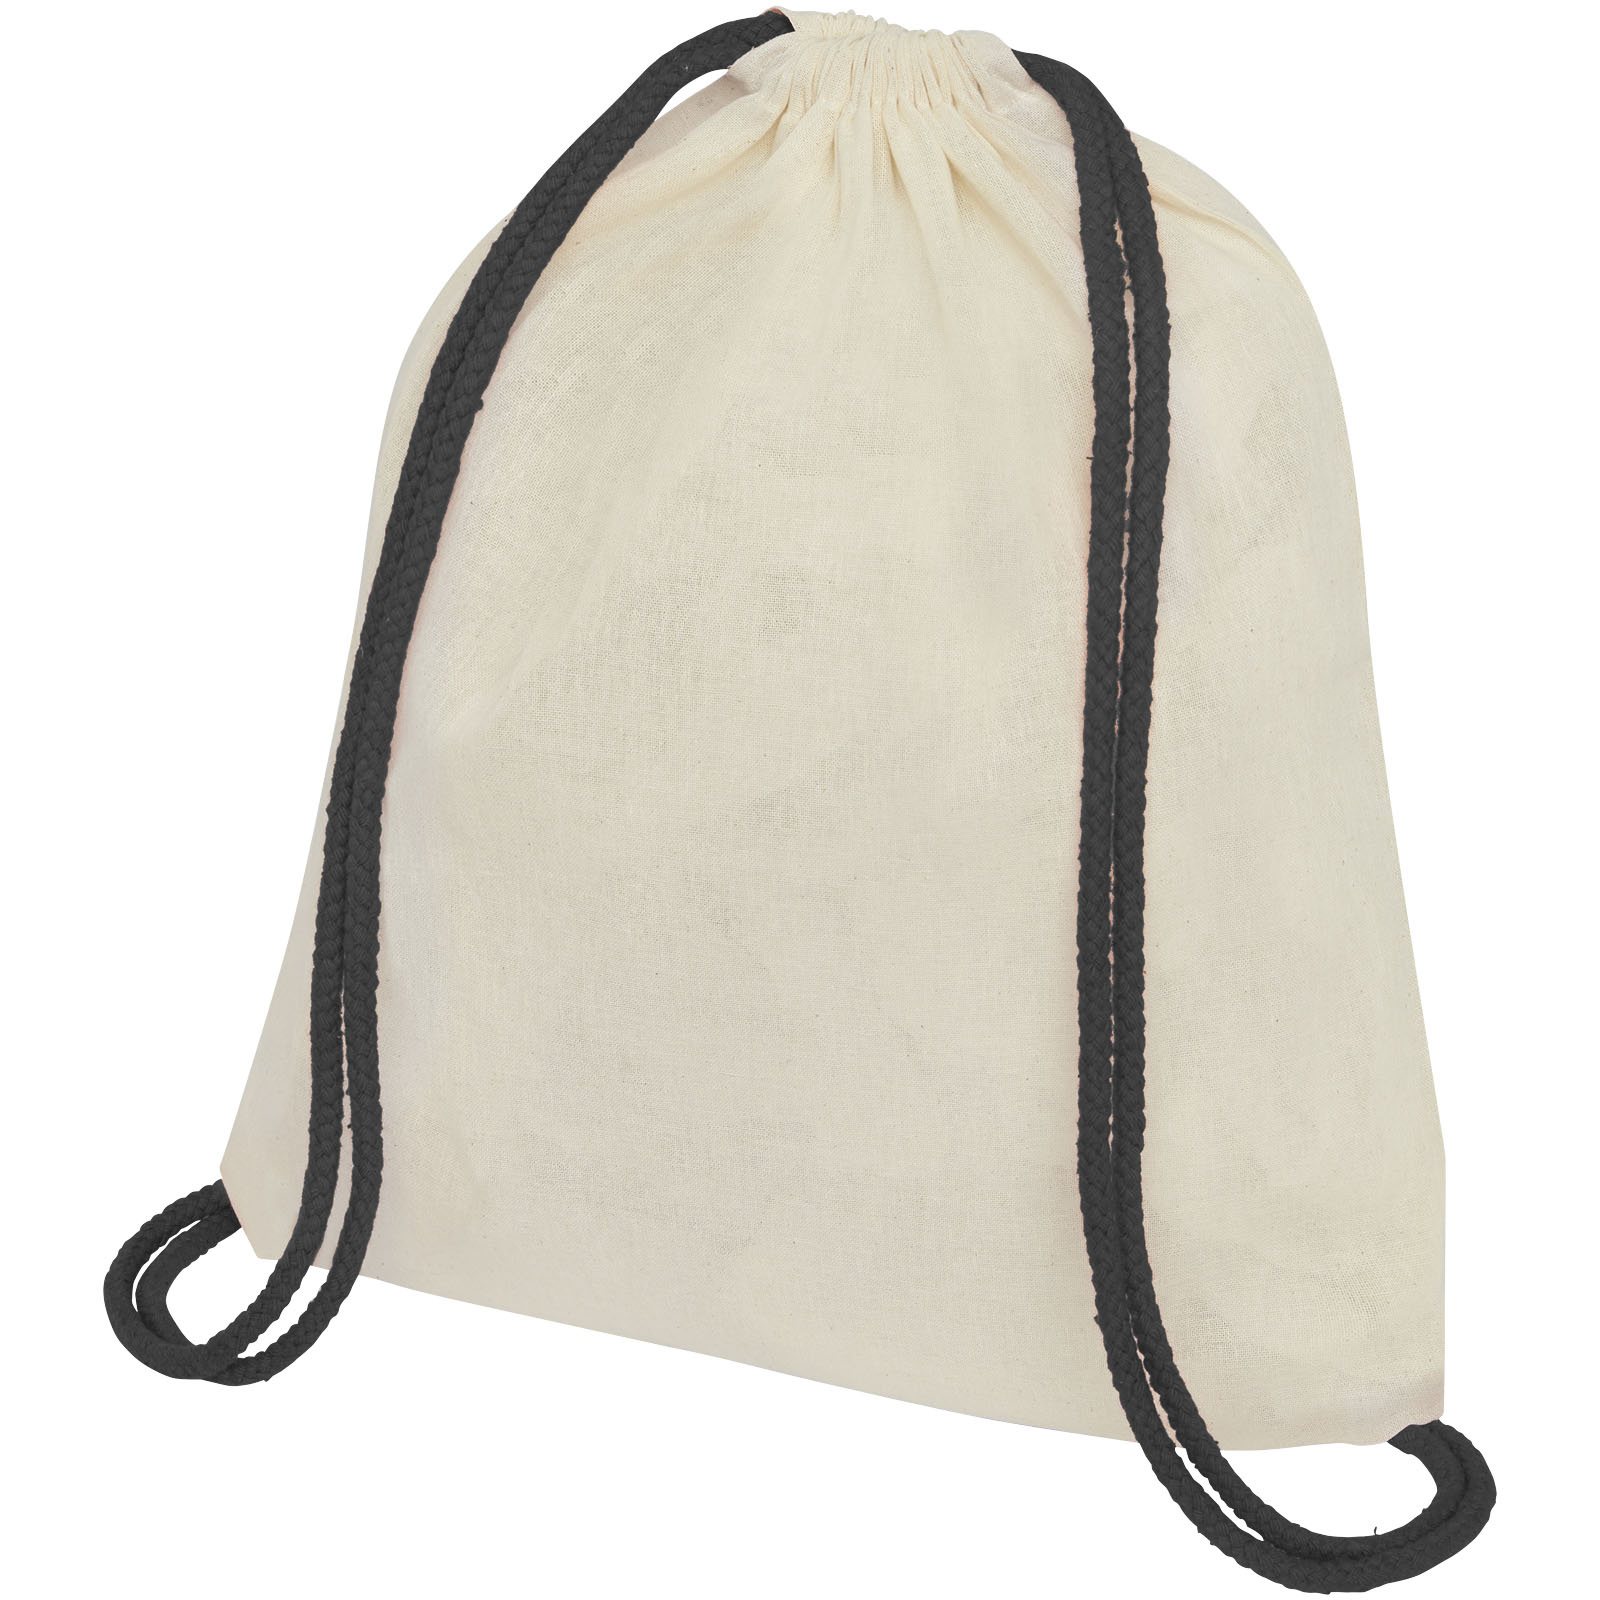 Drawstring Bags - Oregon 100 g/m² cotton drawstring bag with coloured cords 5L